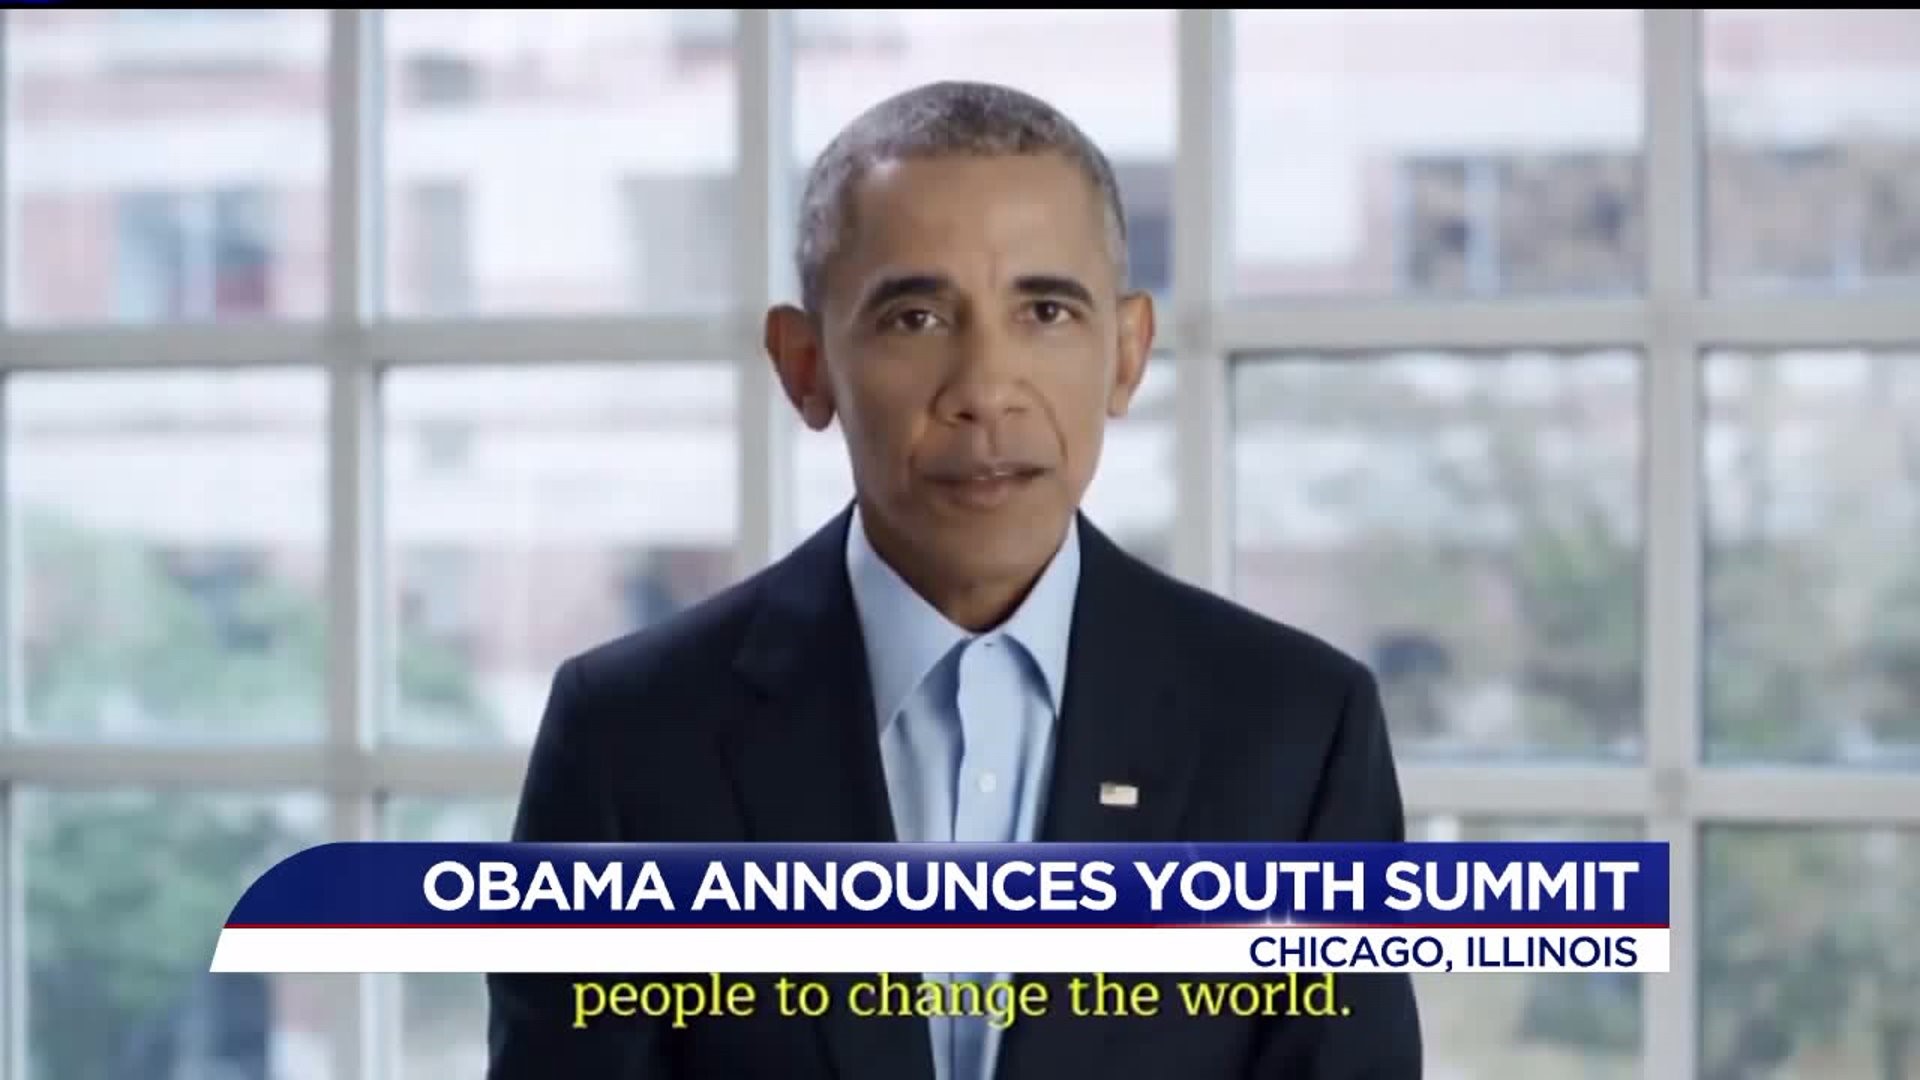 Obama returning to Chicago for summit